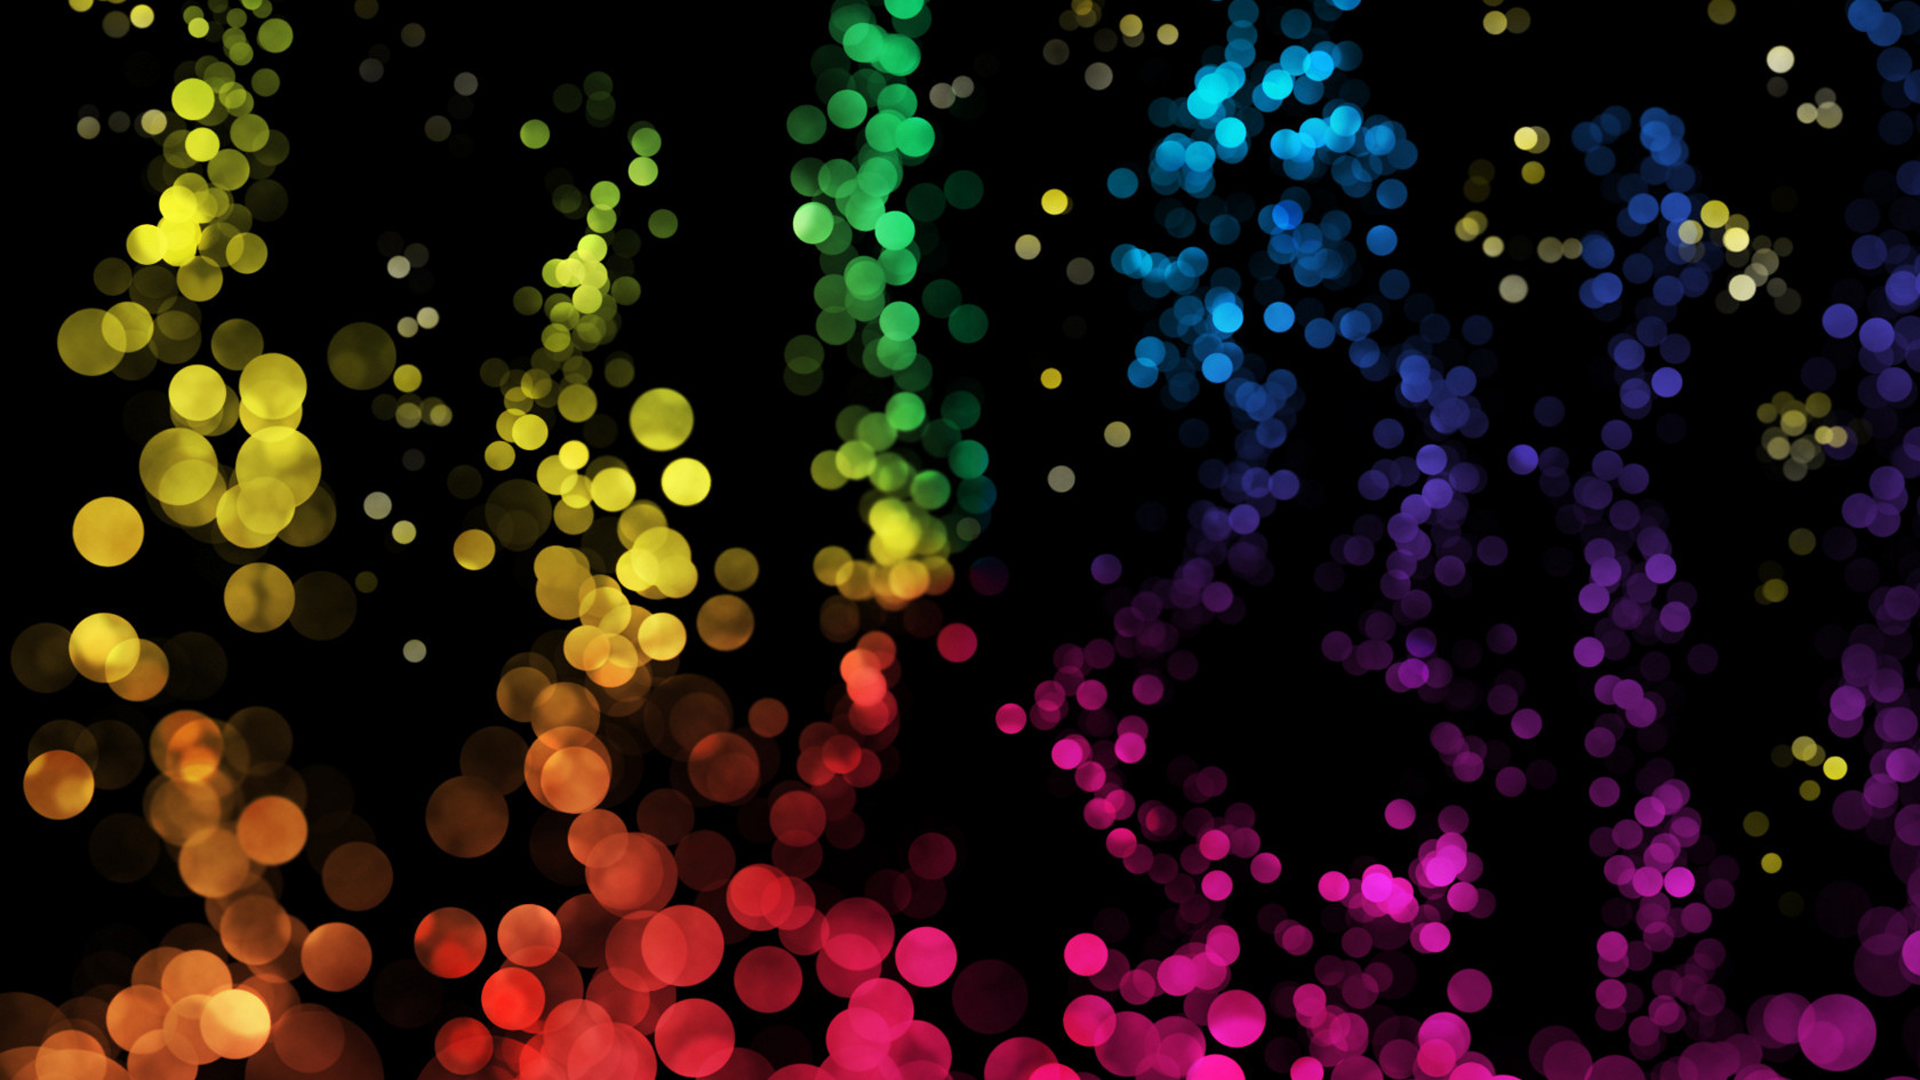 lights, bubbles, colors - desktop wallpaper